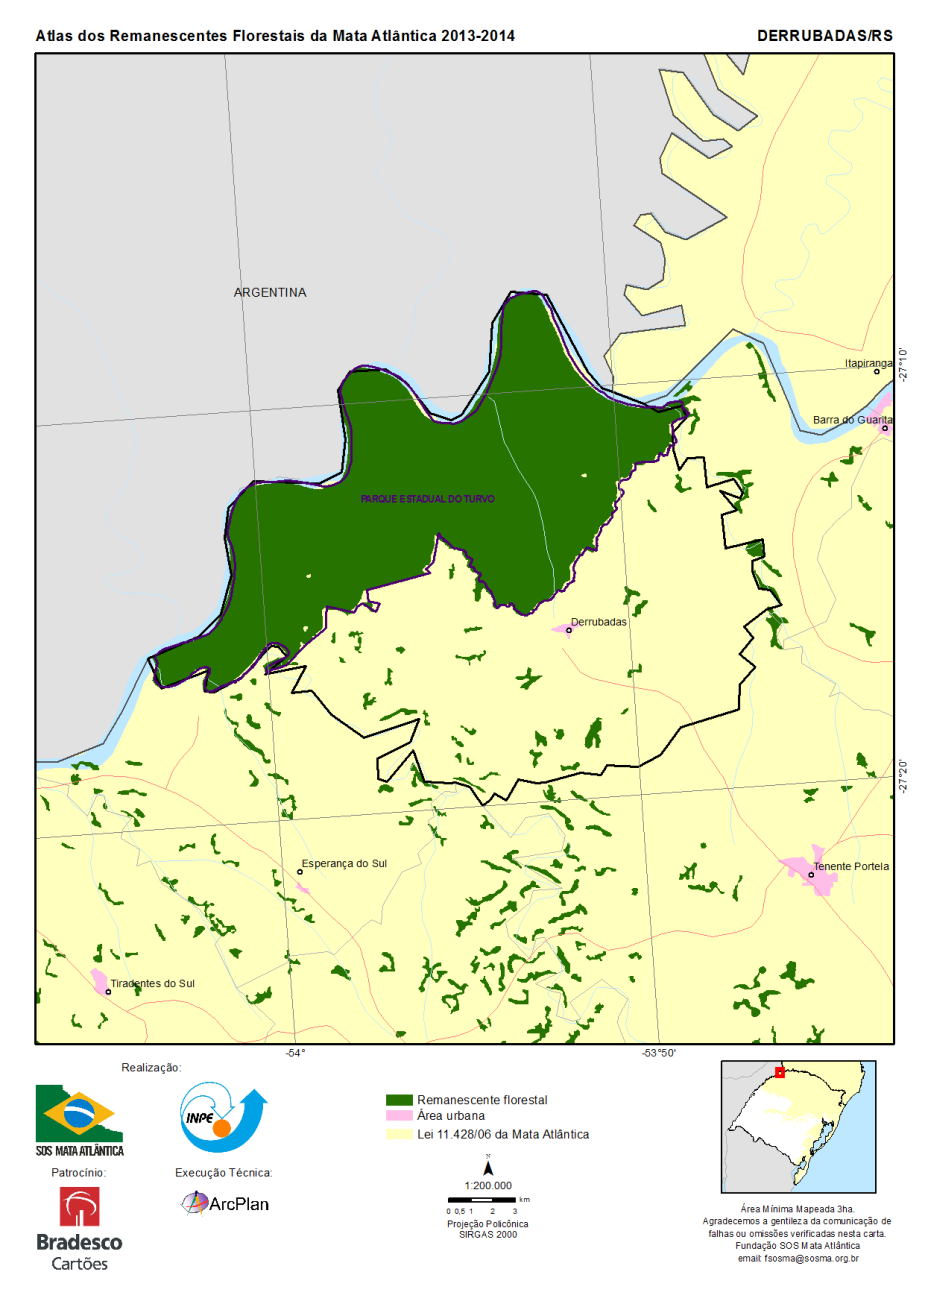 Mapas por Município Rio Grande do Sul Mais conservado 48% de Mata